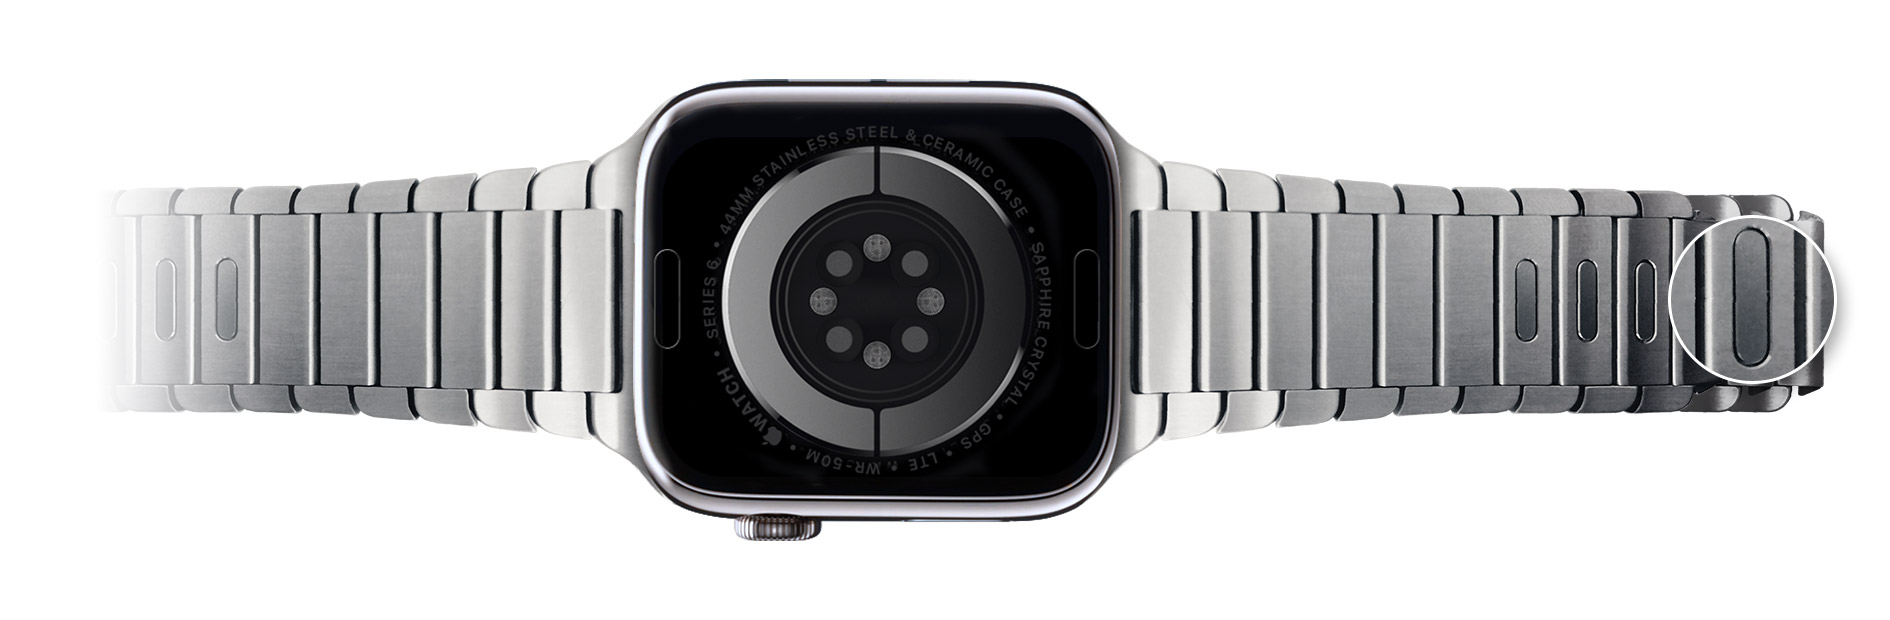 Apple Watch 밴드 링크의 빠른 분리 버튼. 